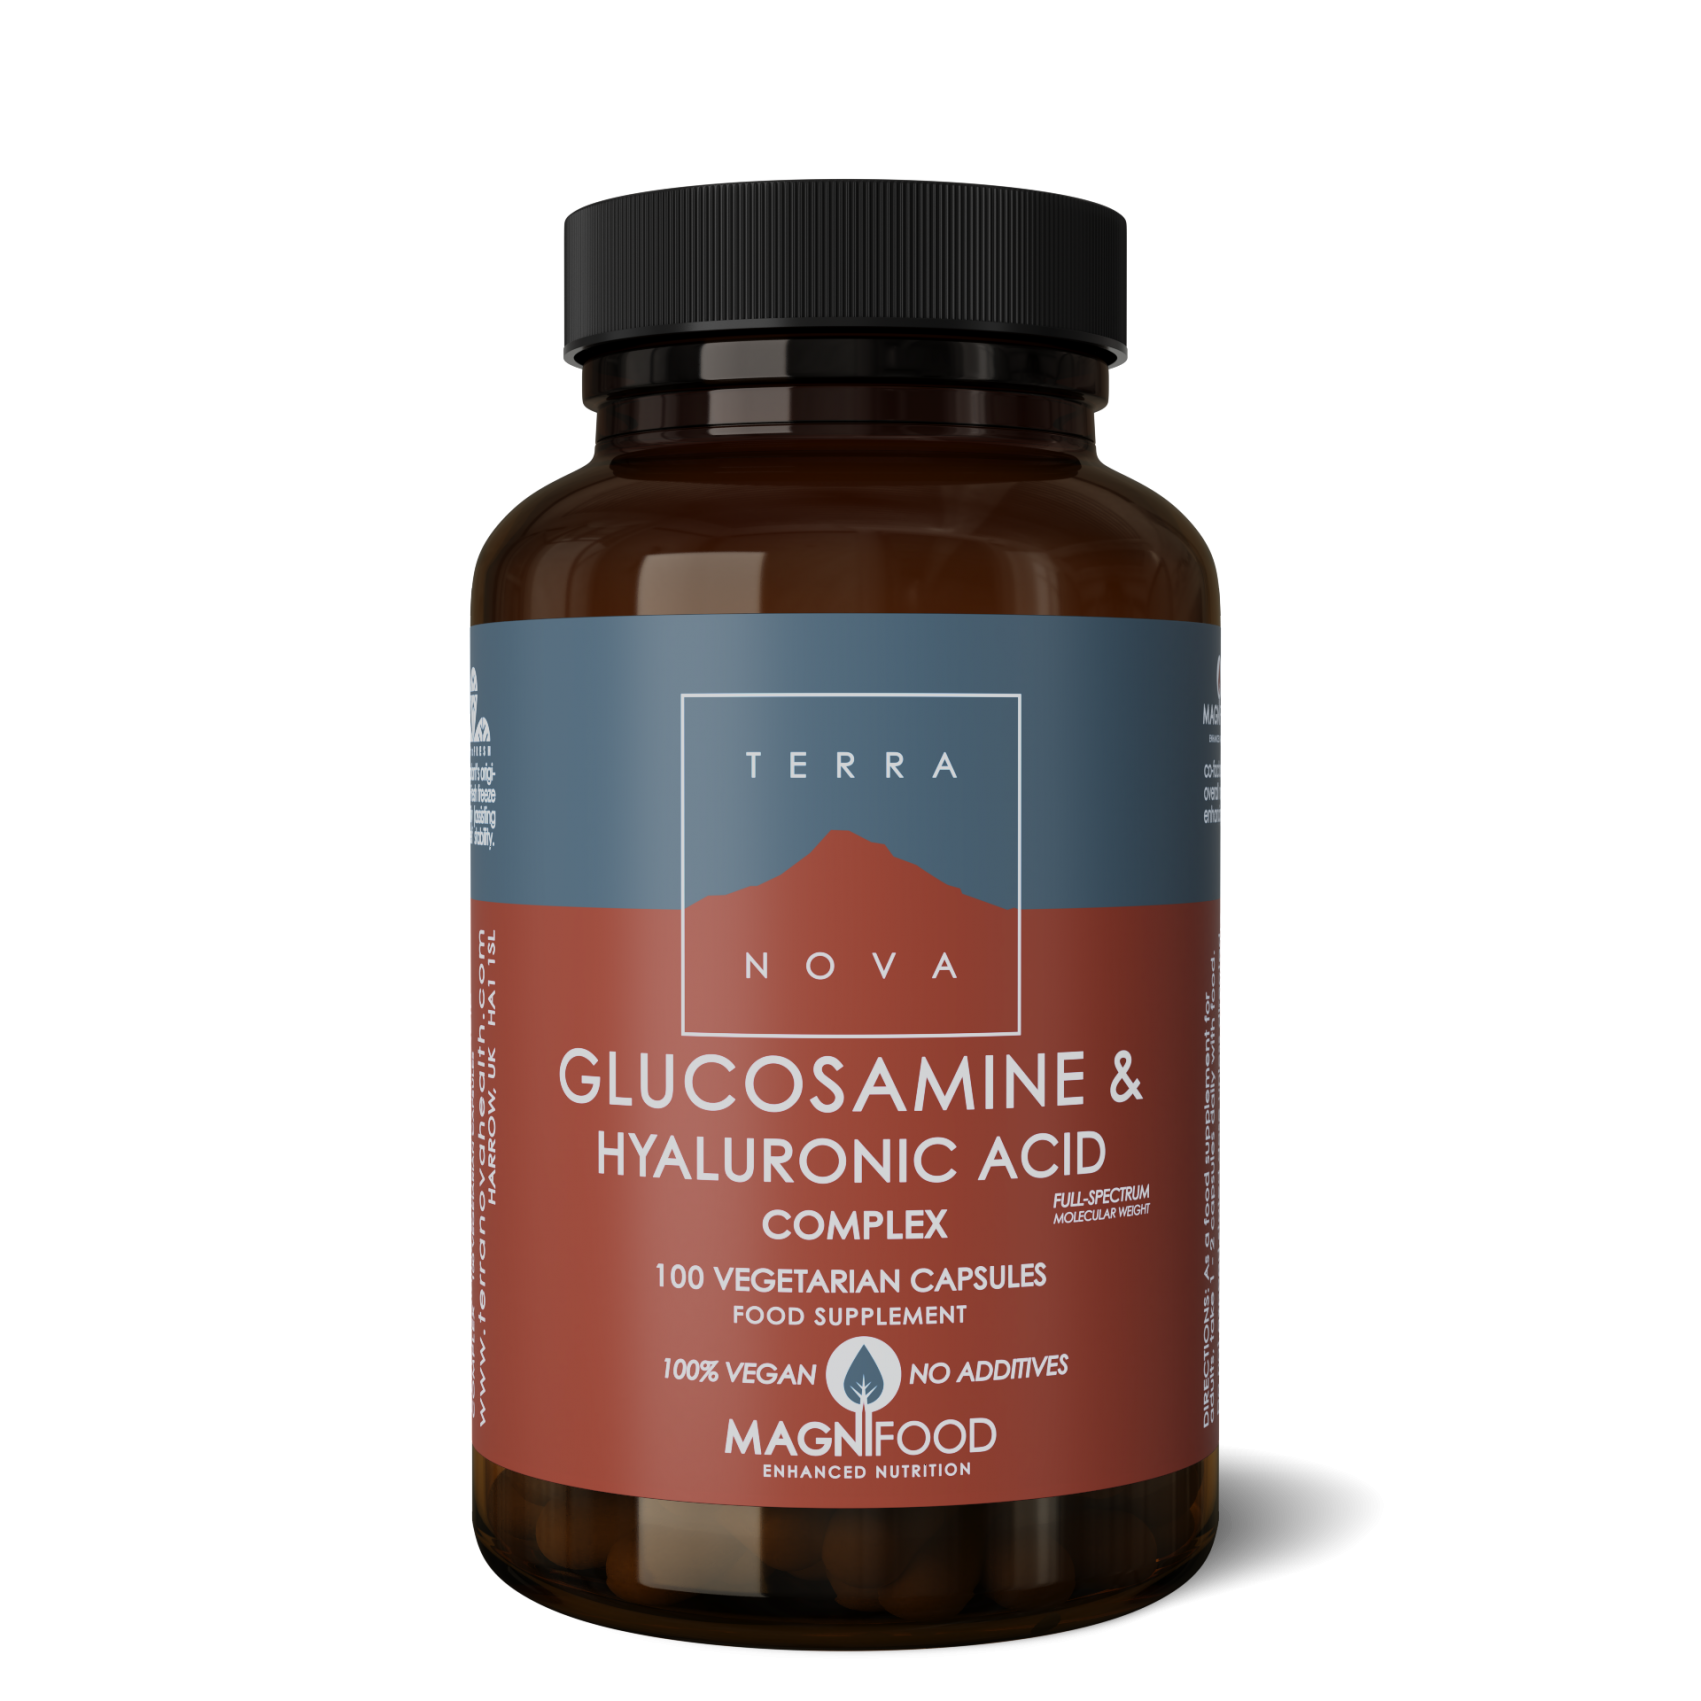 Glucosamine & Hyaluronic Acid Complex 100's